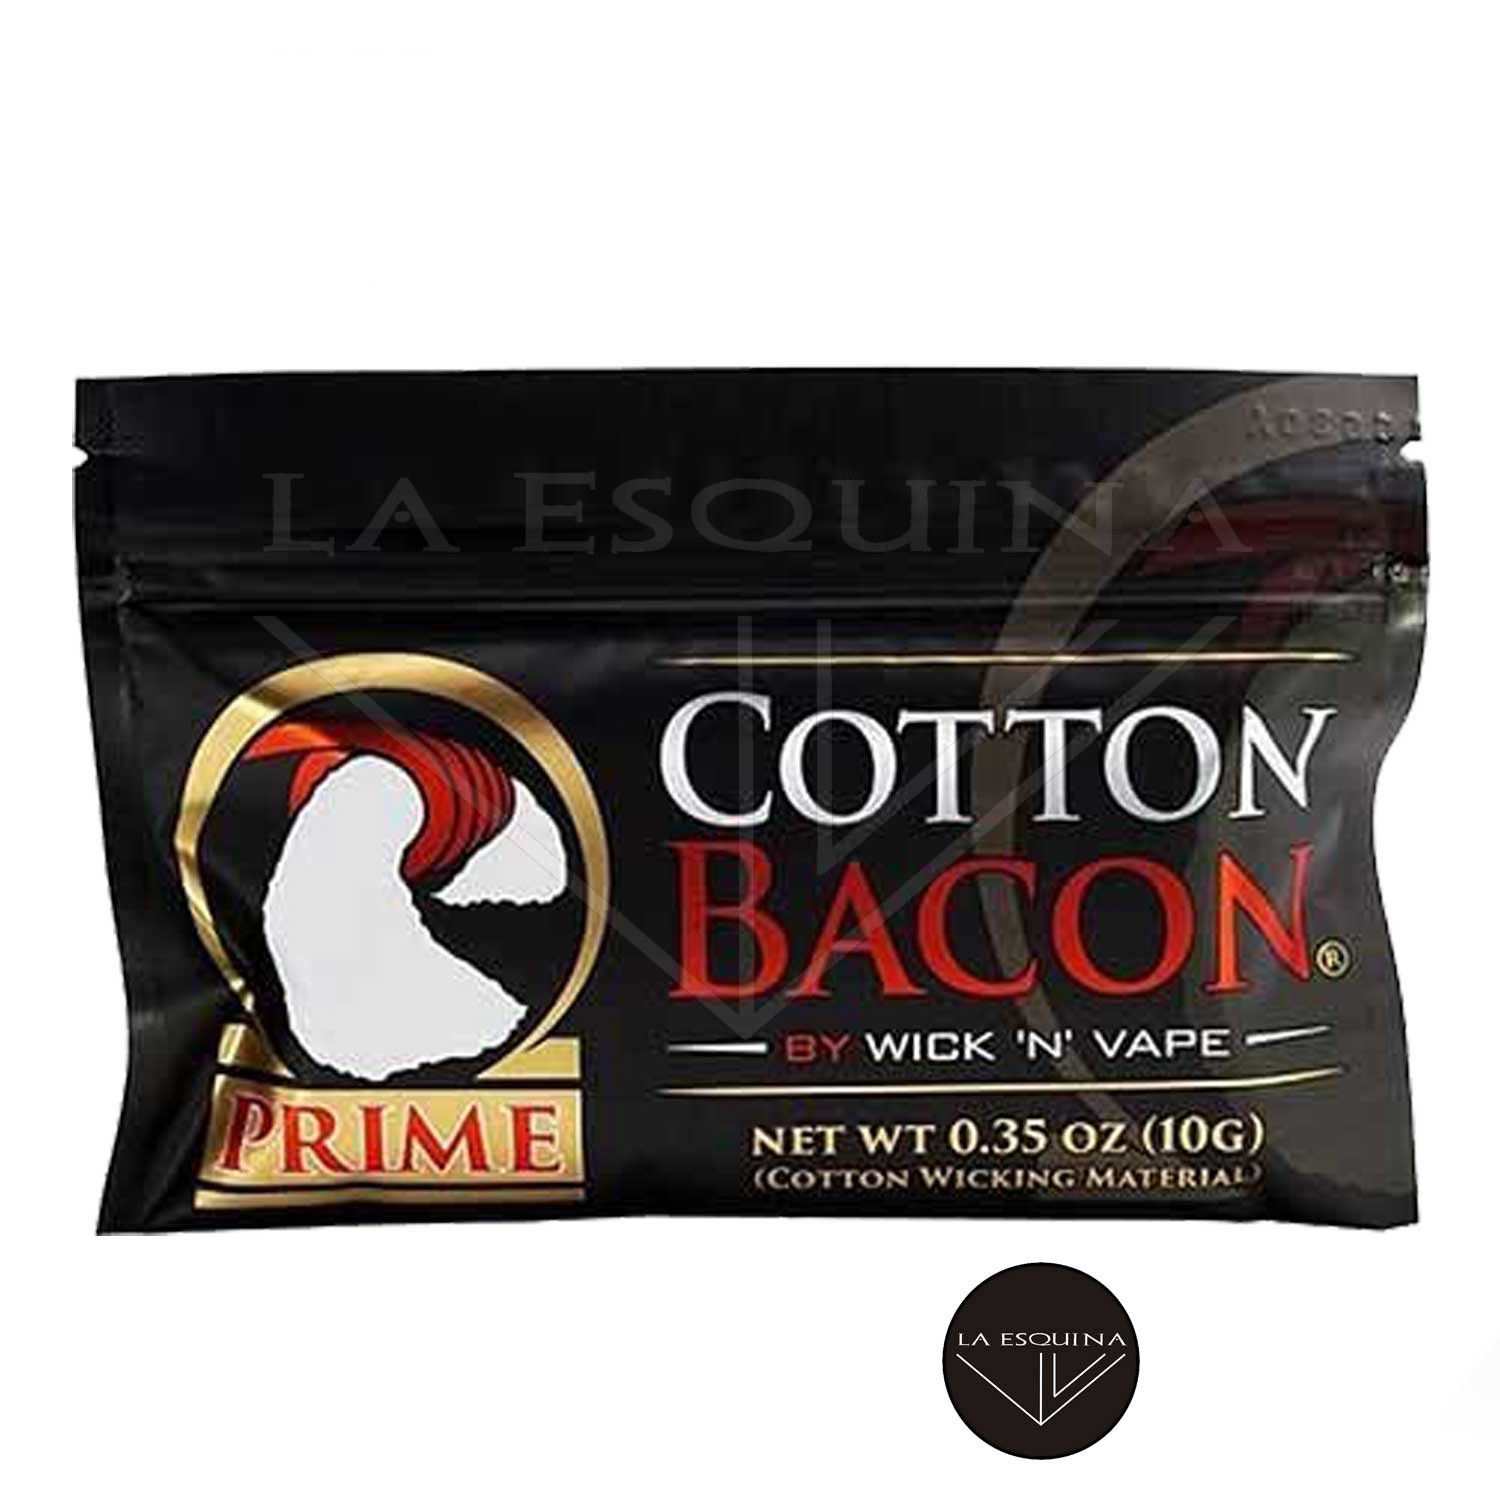 Algodón Cotton Bacon Prime WICK ‘N’ VAPE